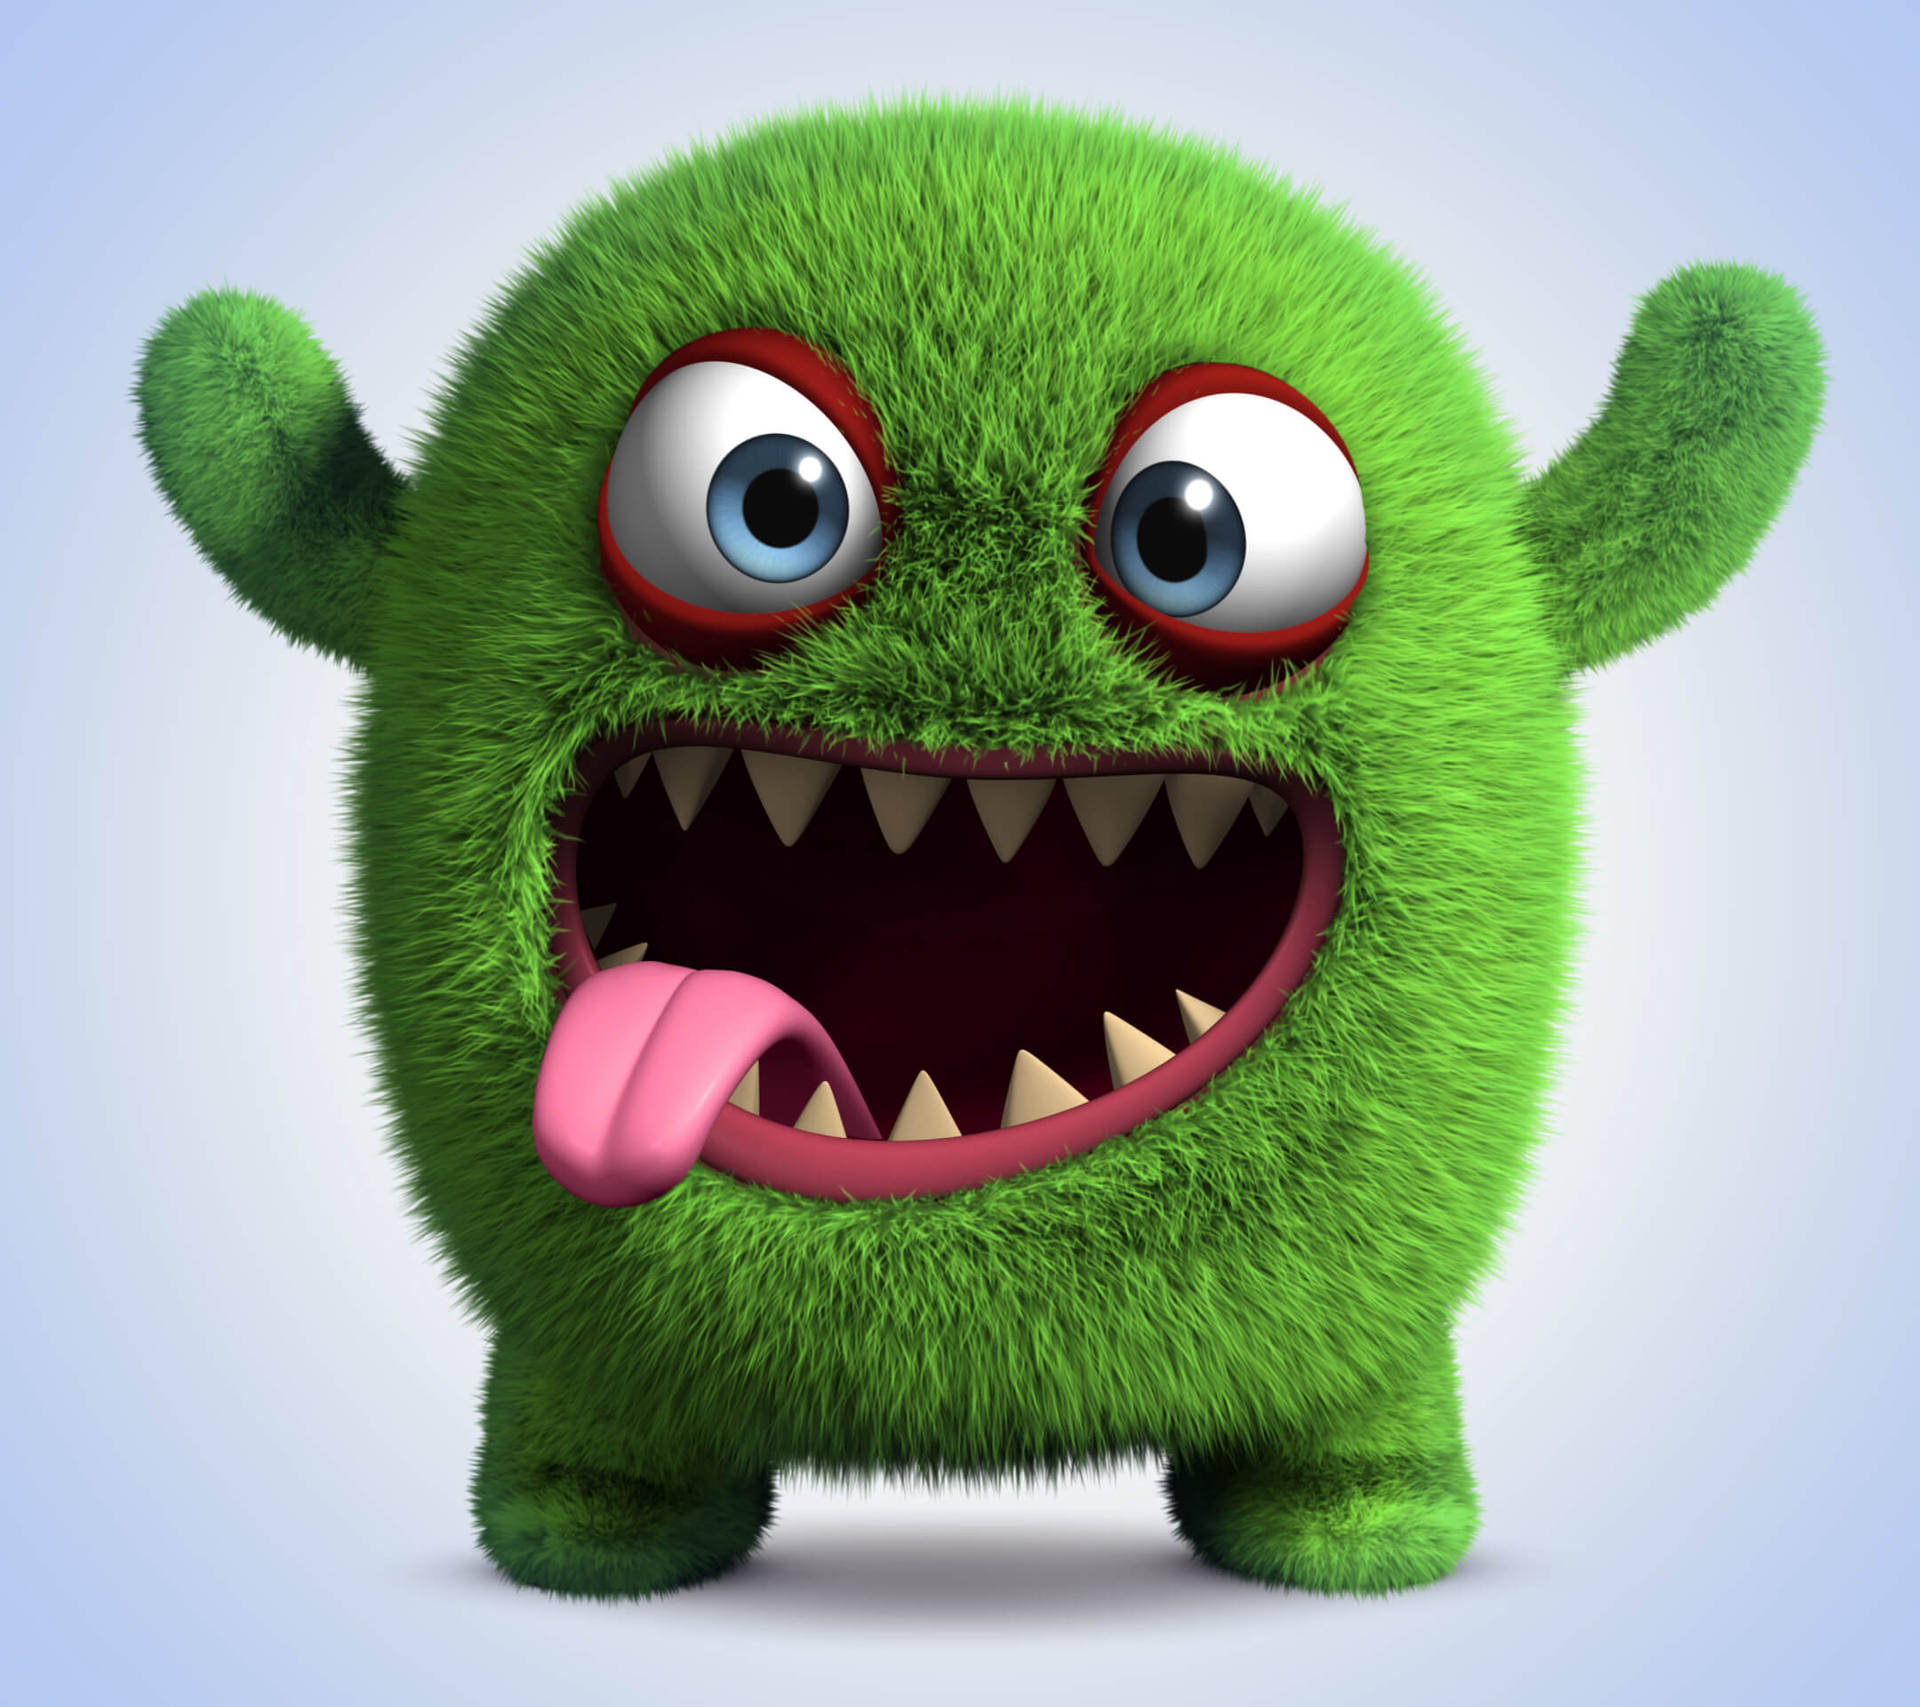 3d Green Monster Image Background